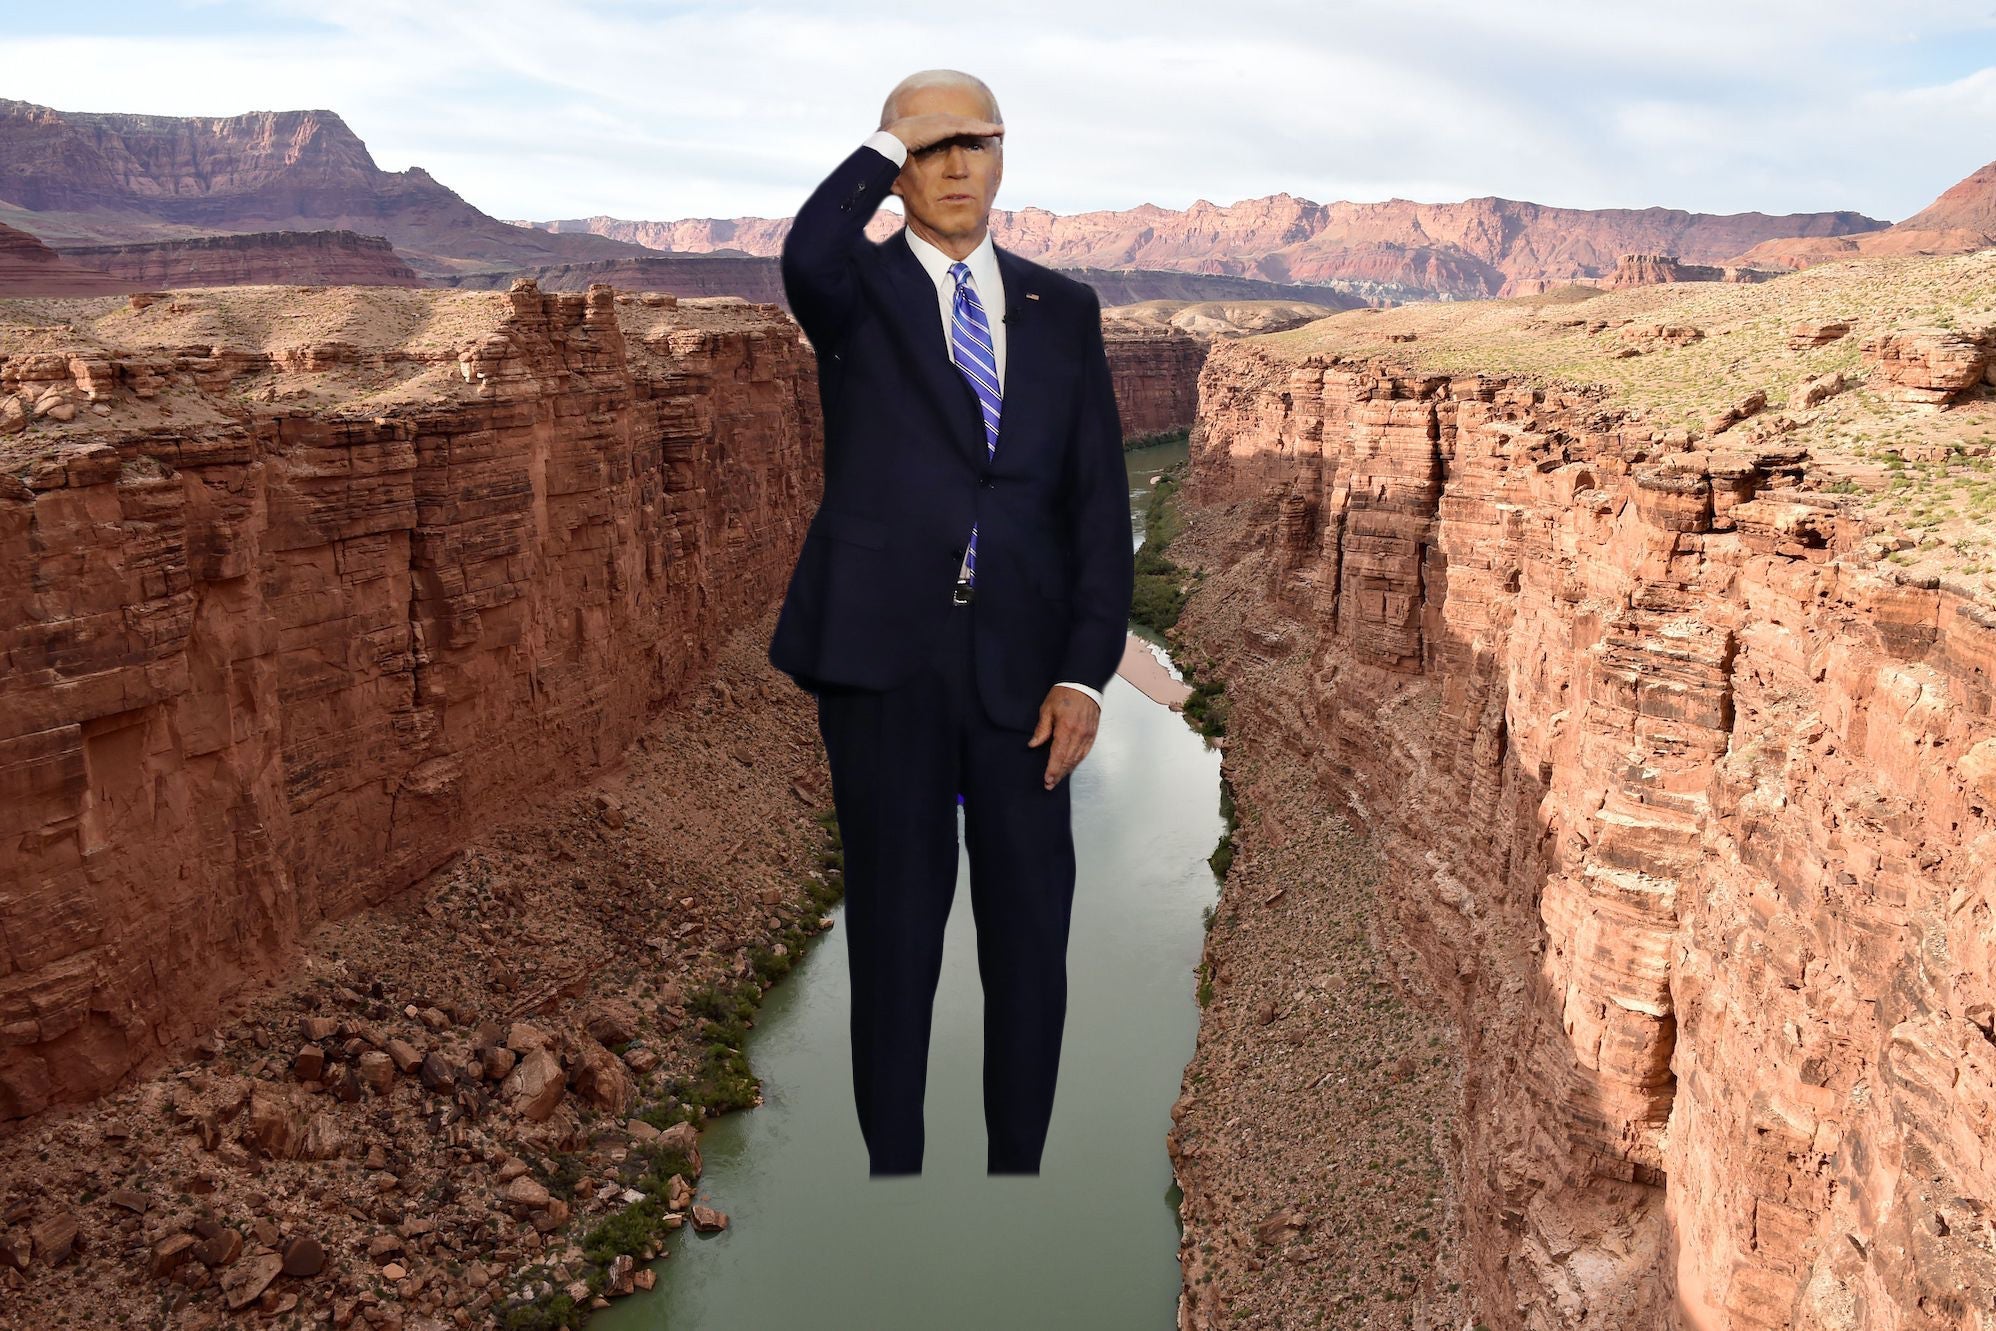 Giant Joe Biden photoshopped standing in the Grand Canyon